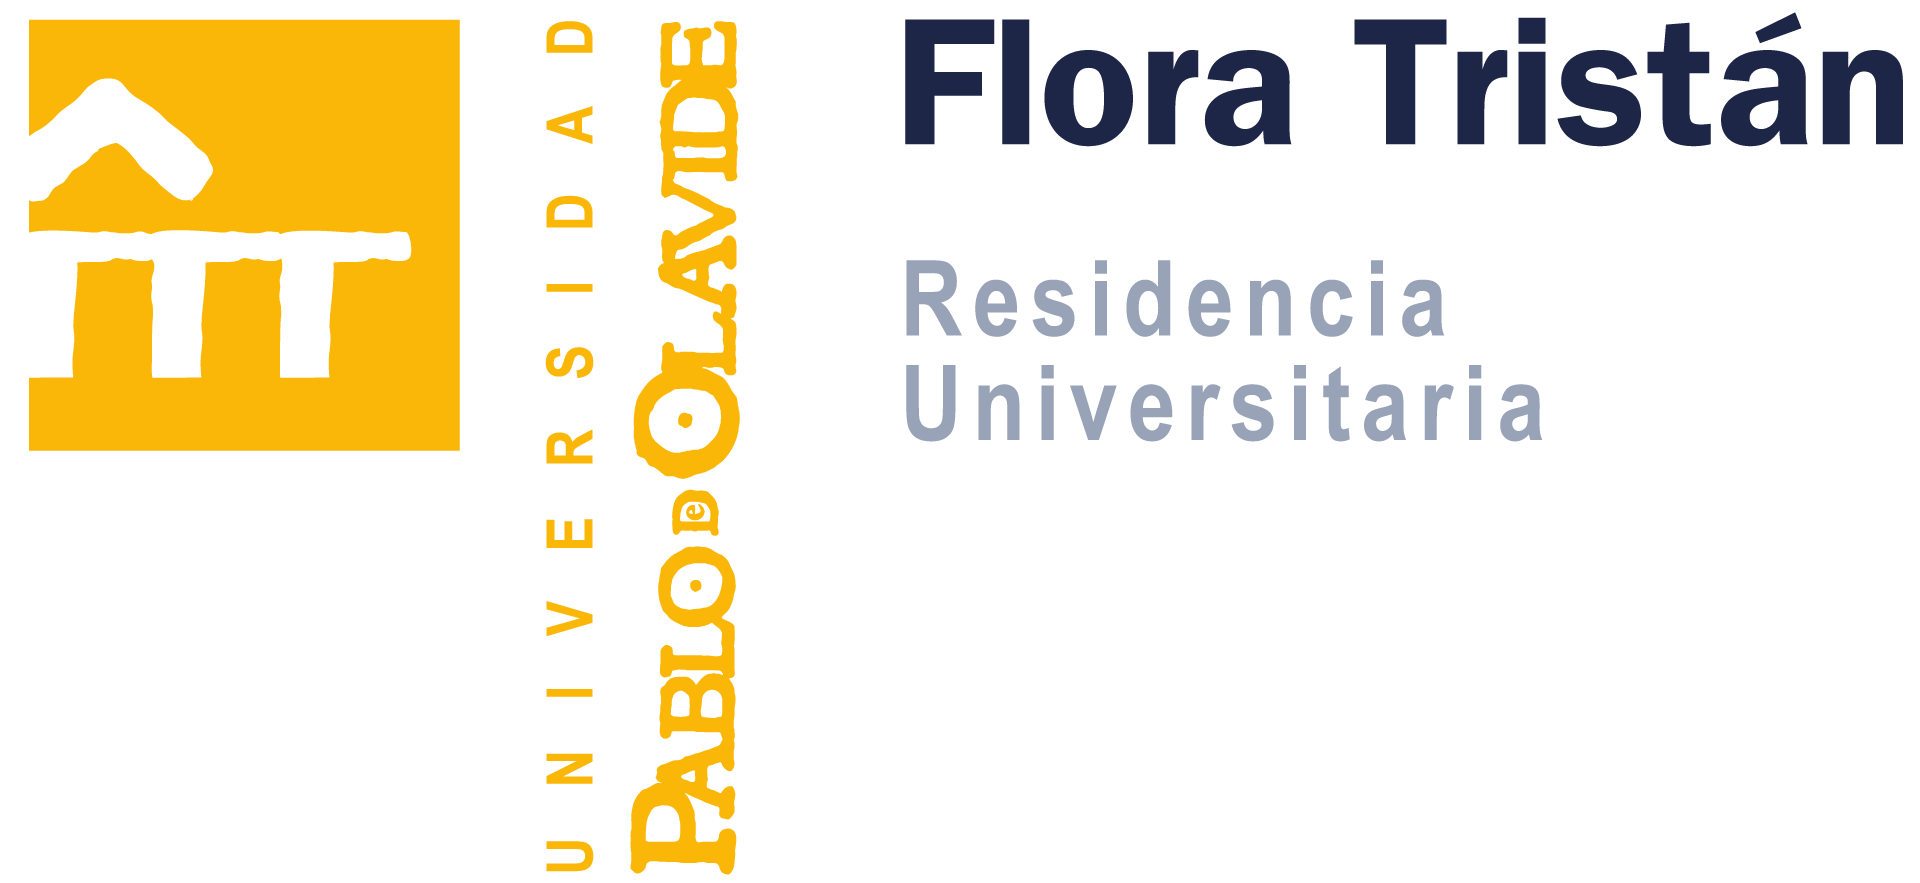 Residencia Universitaria Flora Tristán